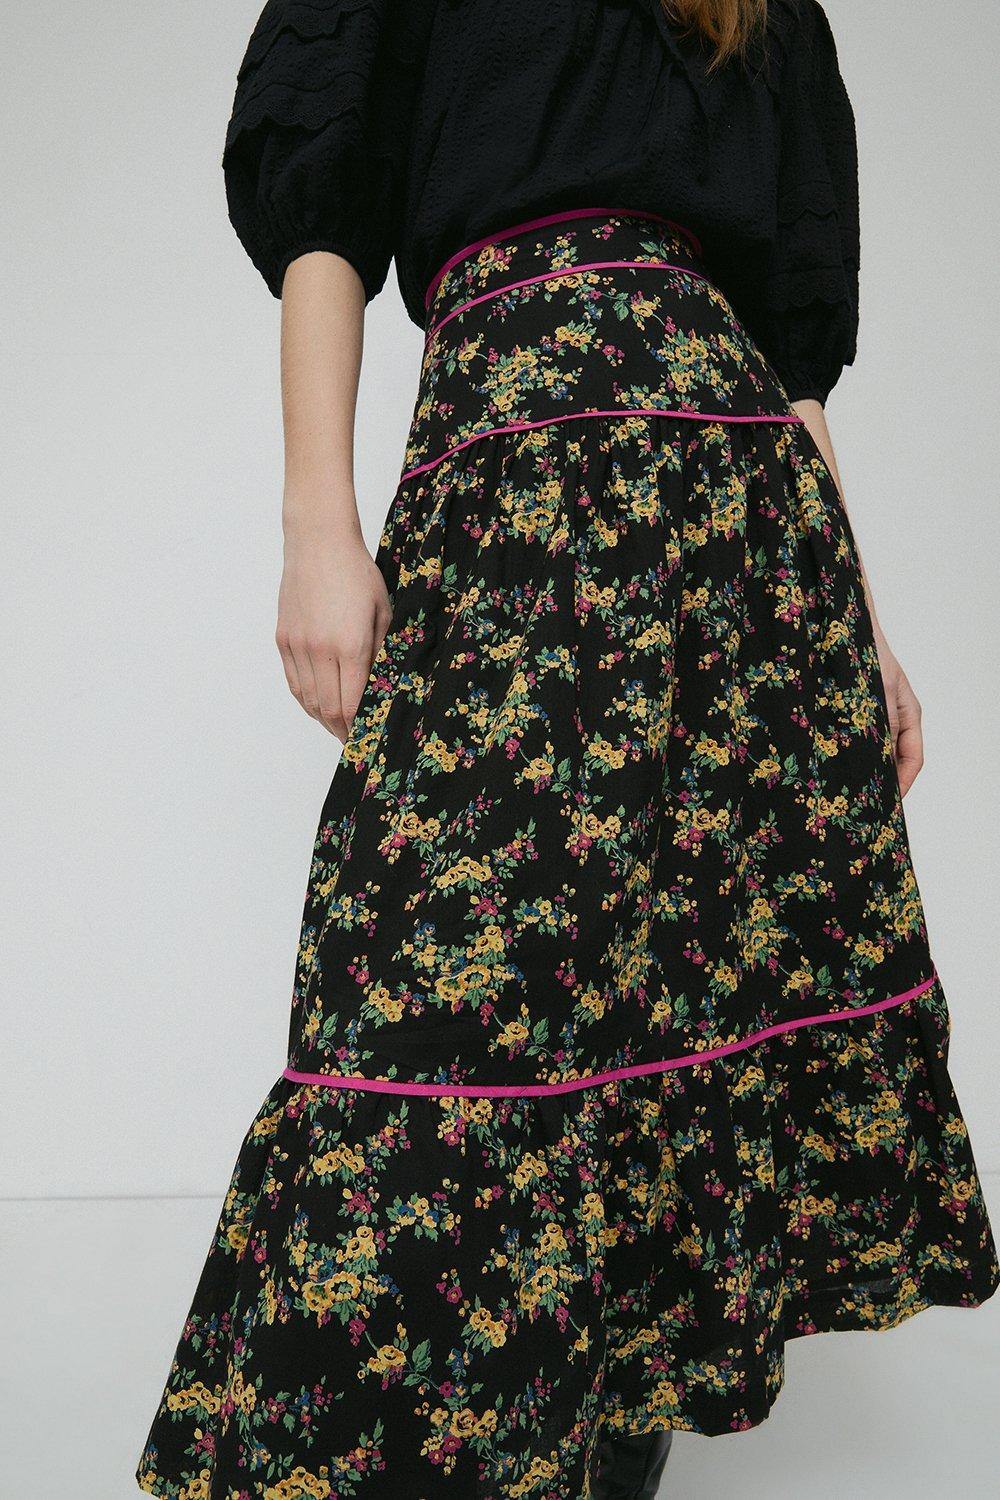 Skirts | Trailing Floral Binding Detail Midi Skirt | Warehouse